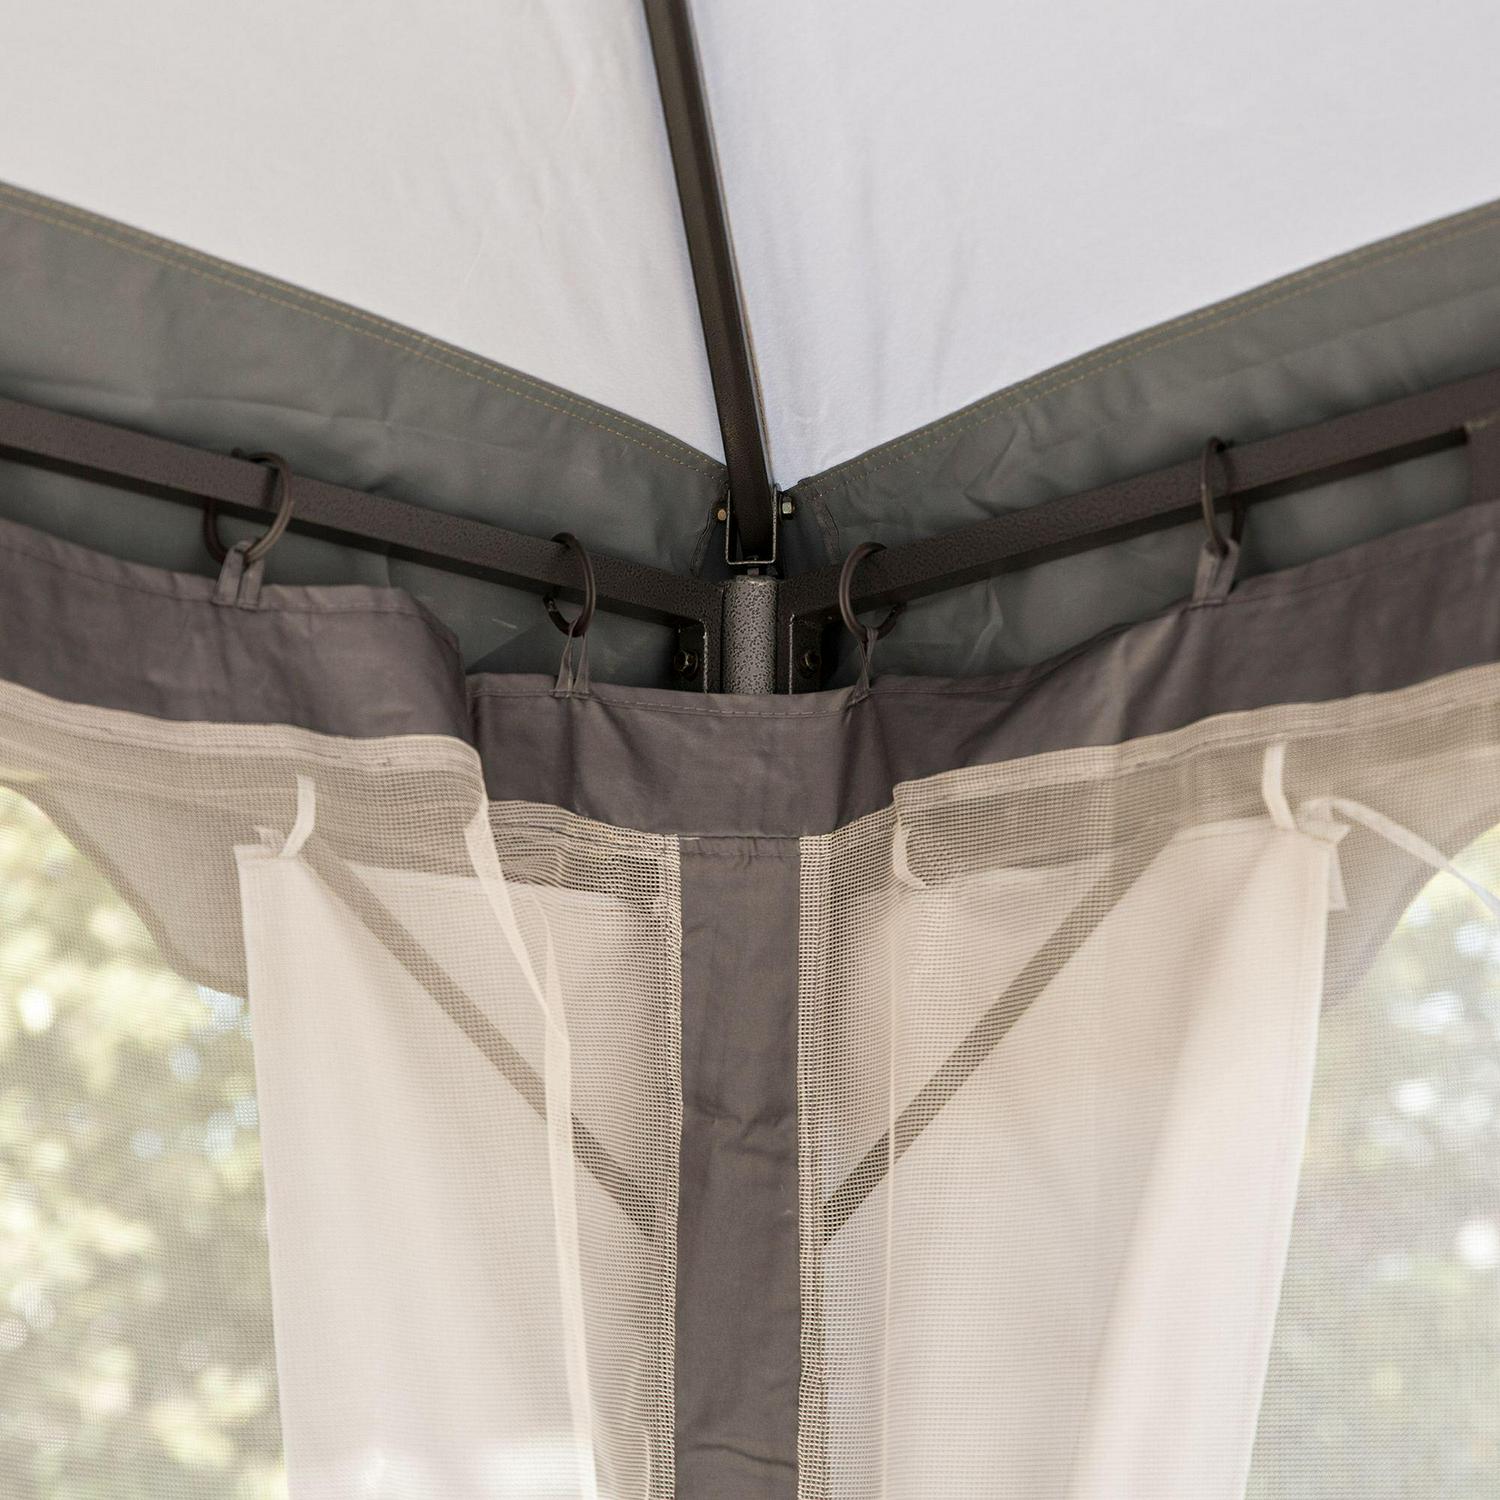 Metal Gazebo Canopy Party Tent - Grey